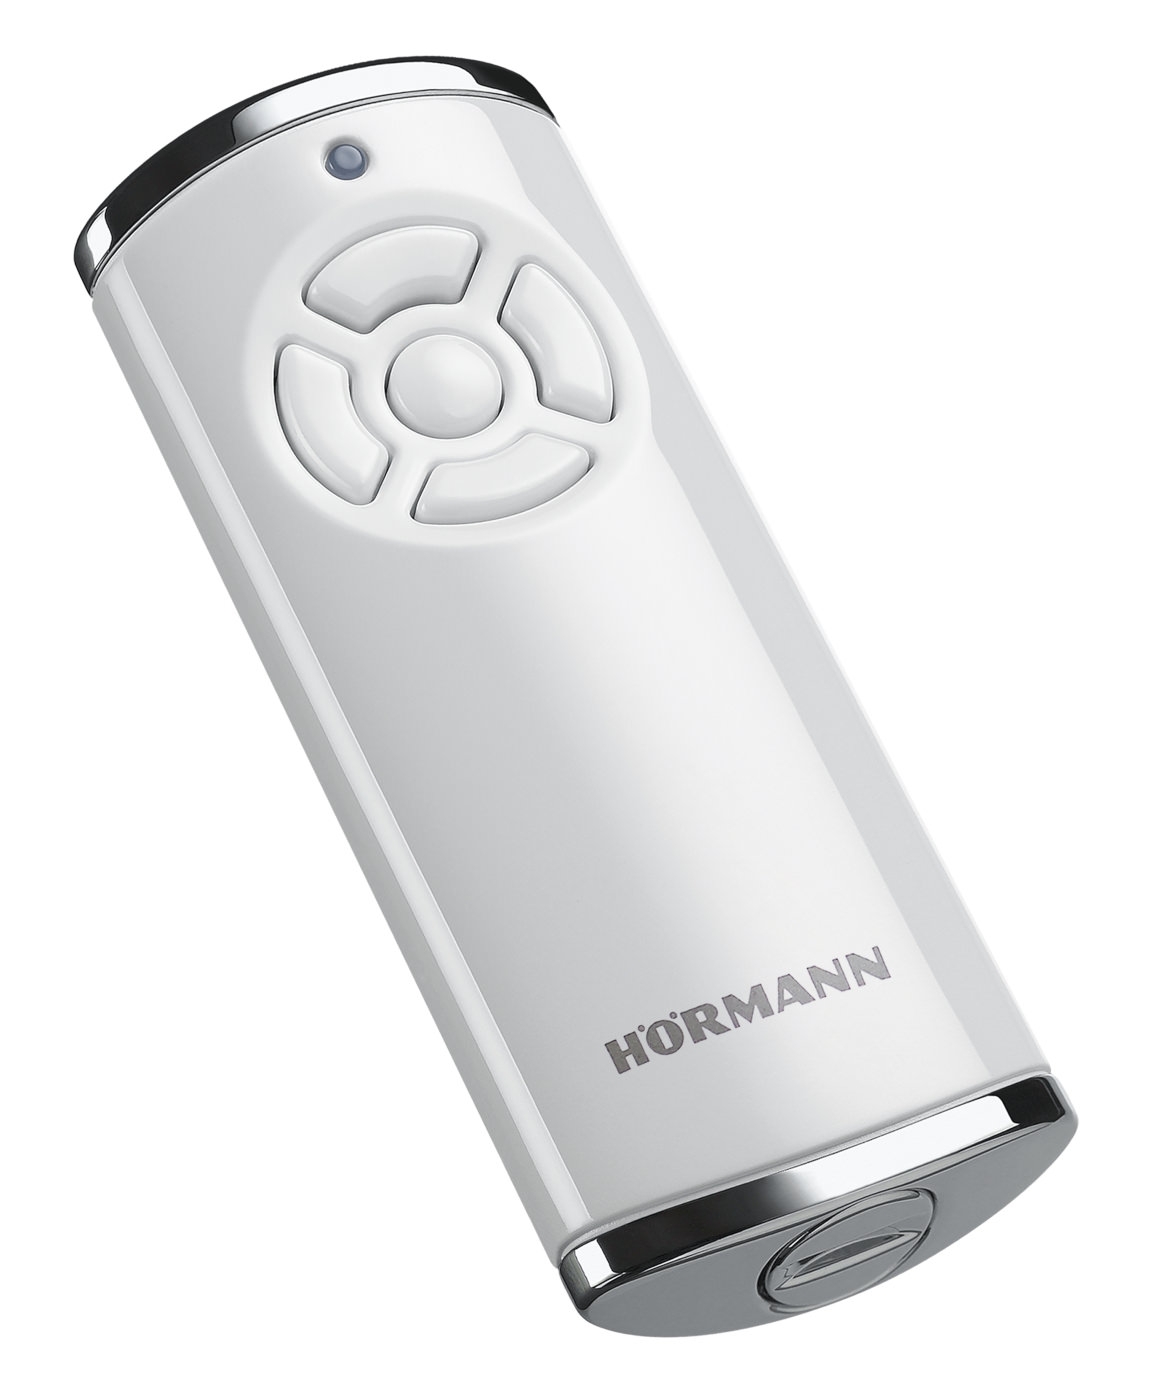 Hörmann BiSecur mini Handsenderhalterung transparent